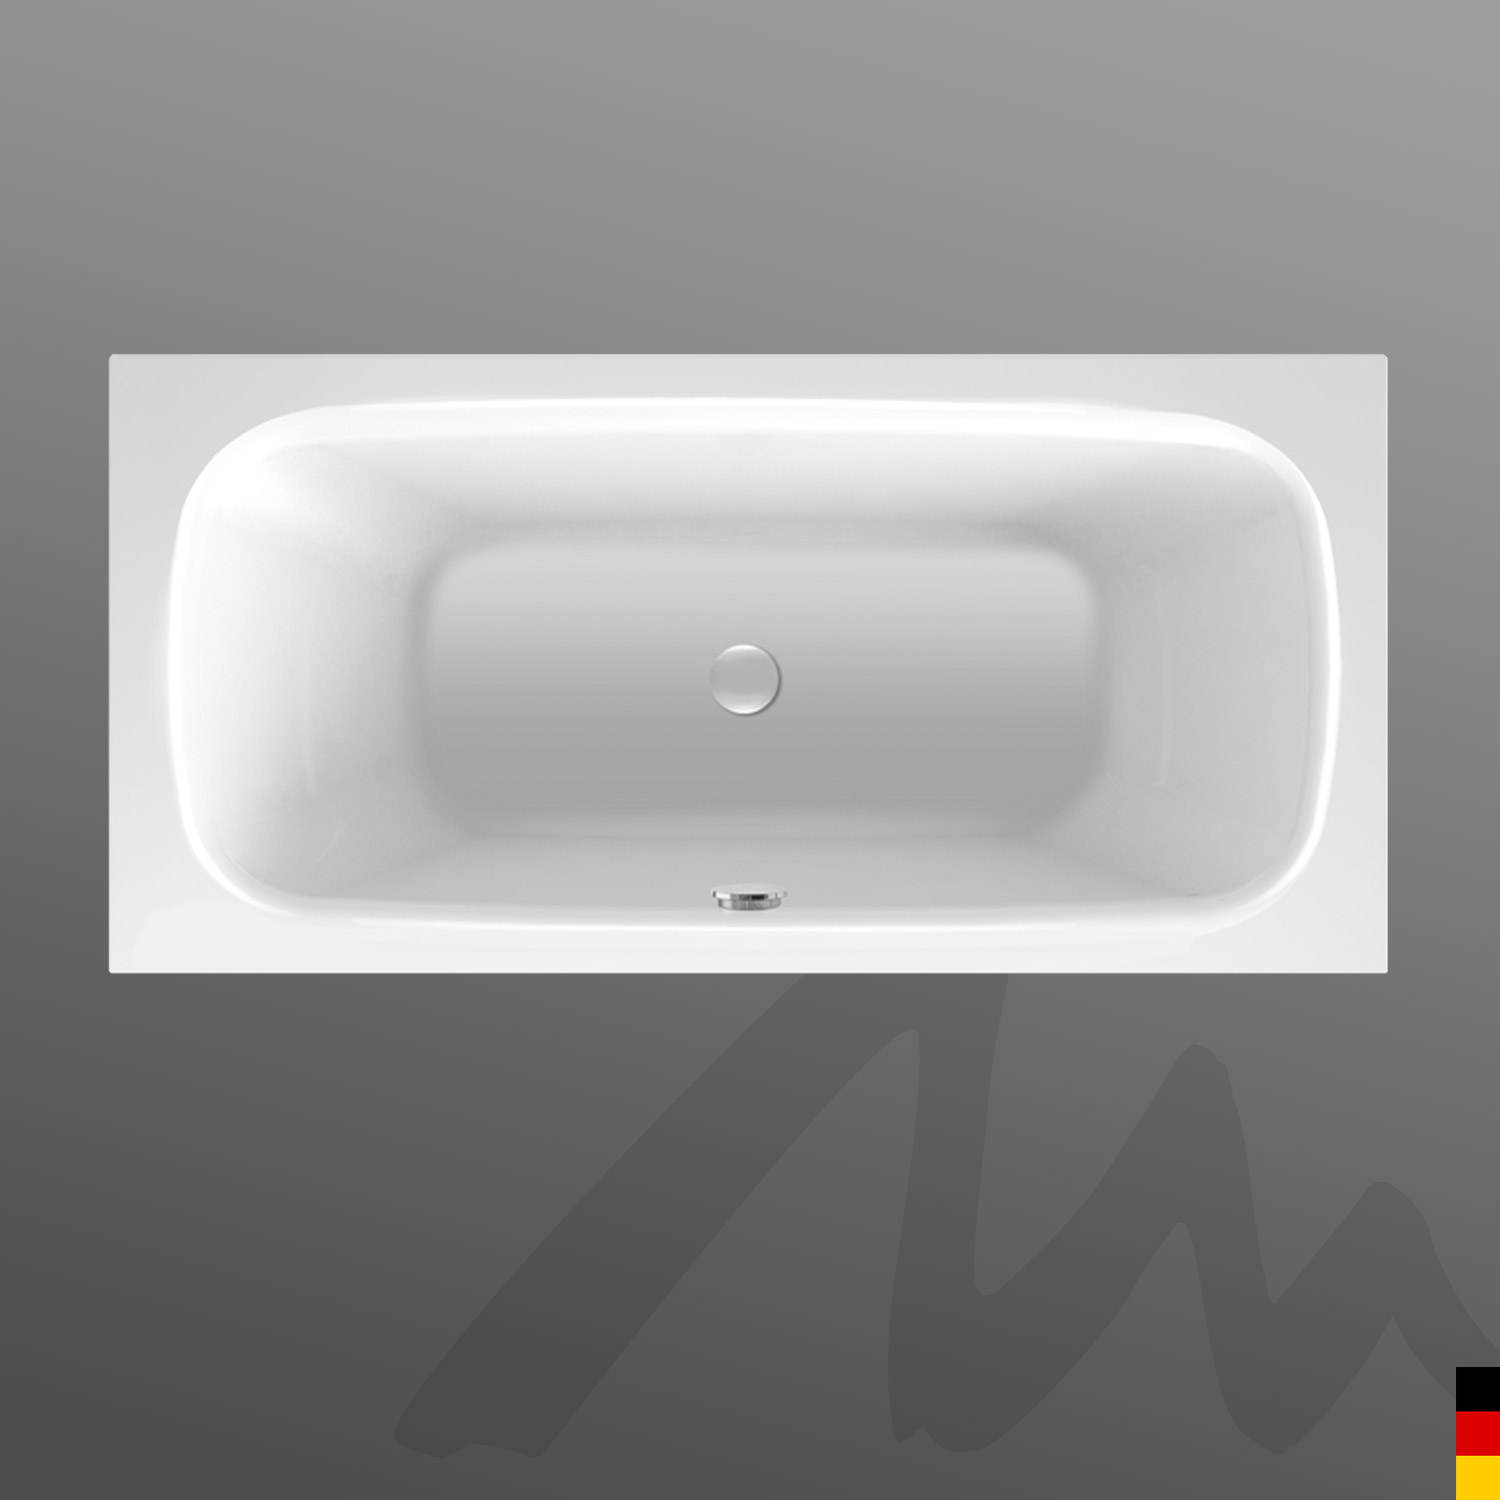 Mauersberger Badewanne Rechteck Nivalis Square 180/90 duo  180x90x43cm  Farbe:rein-weiß